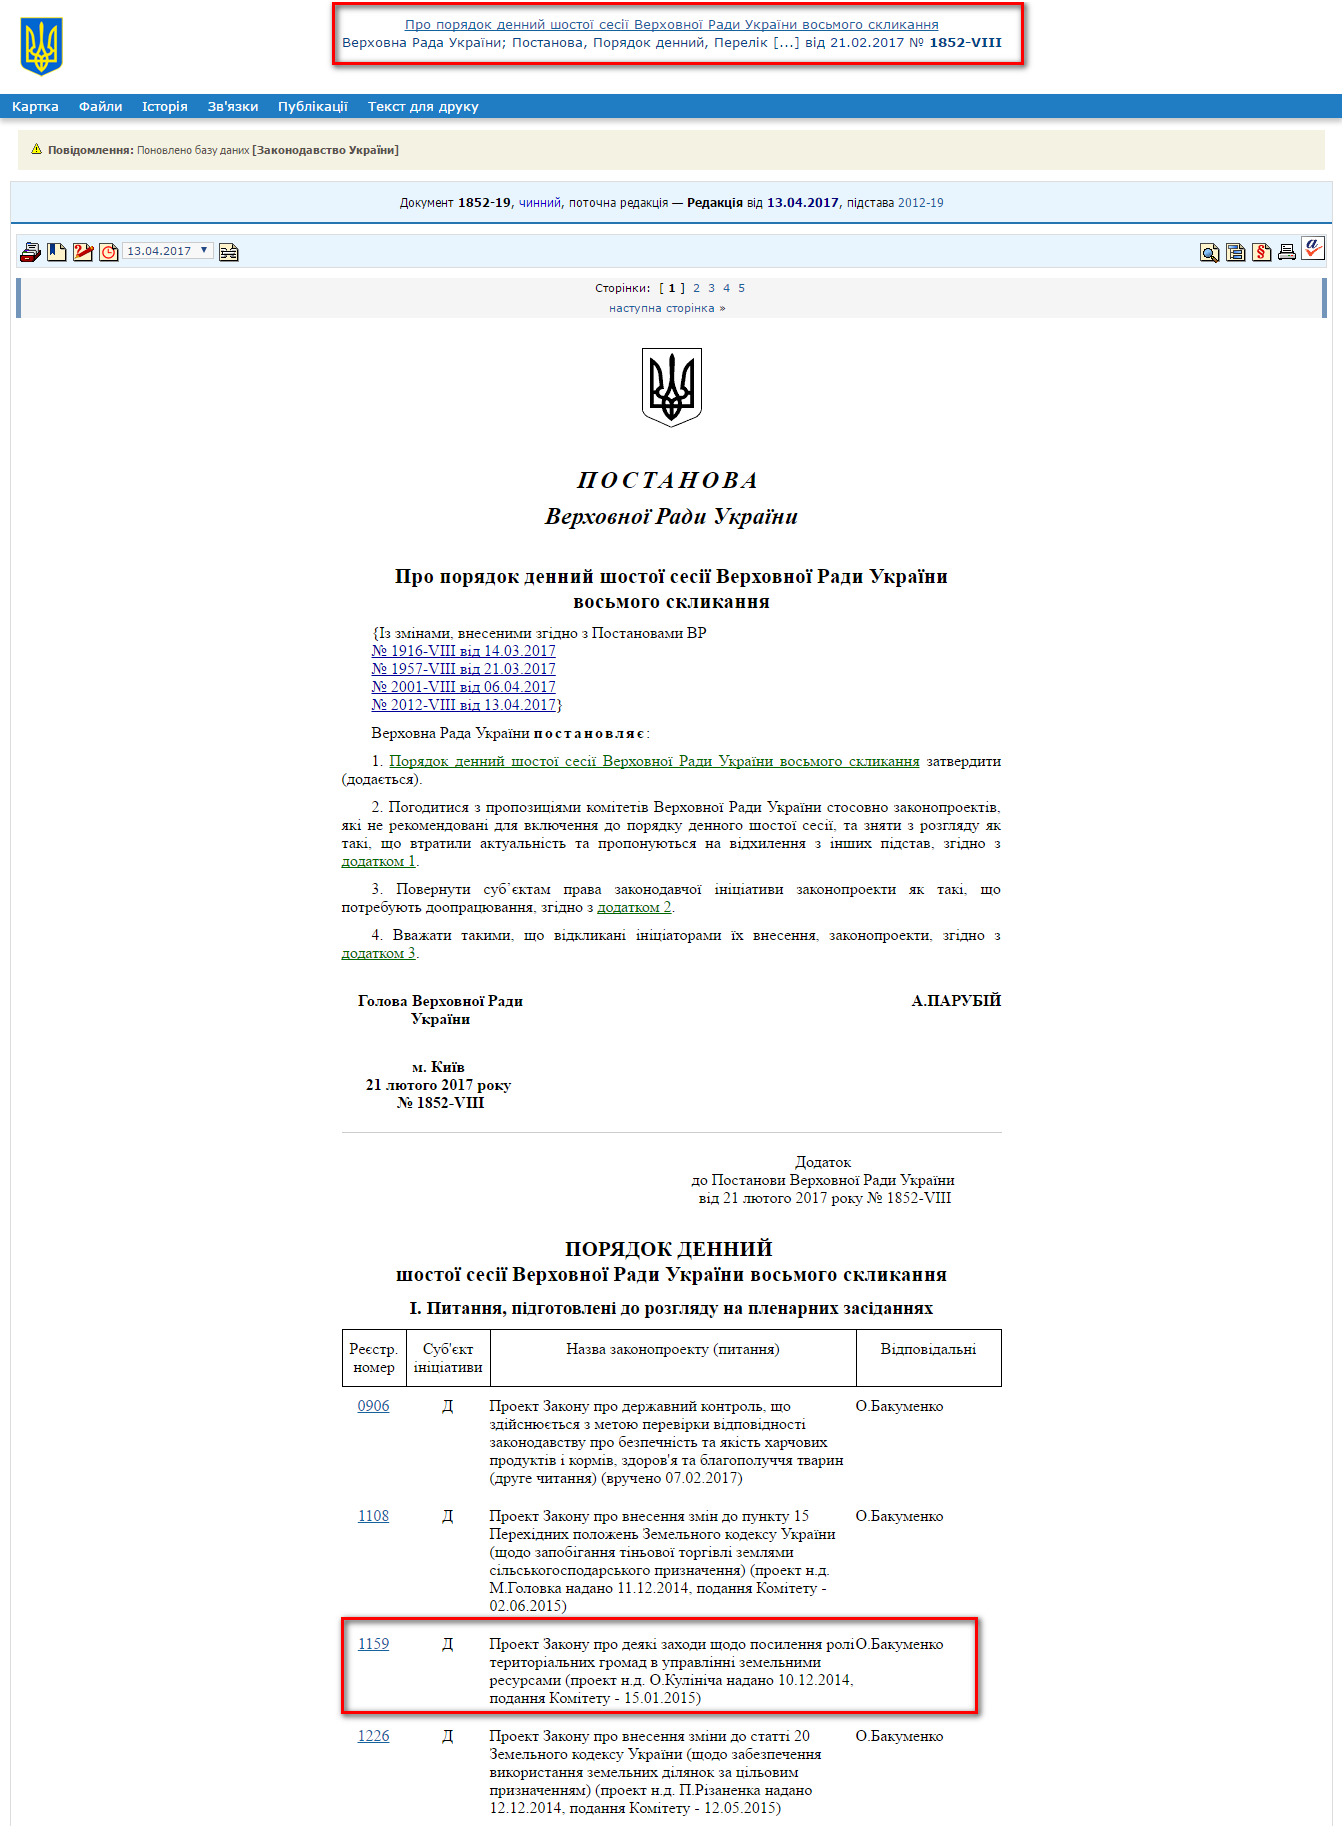 http://zakon5.rada.gov.ua/laws/show/1852-viii